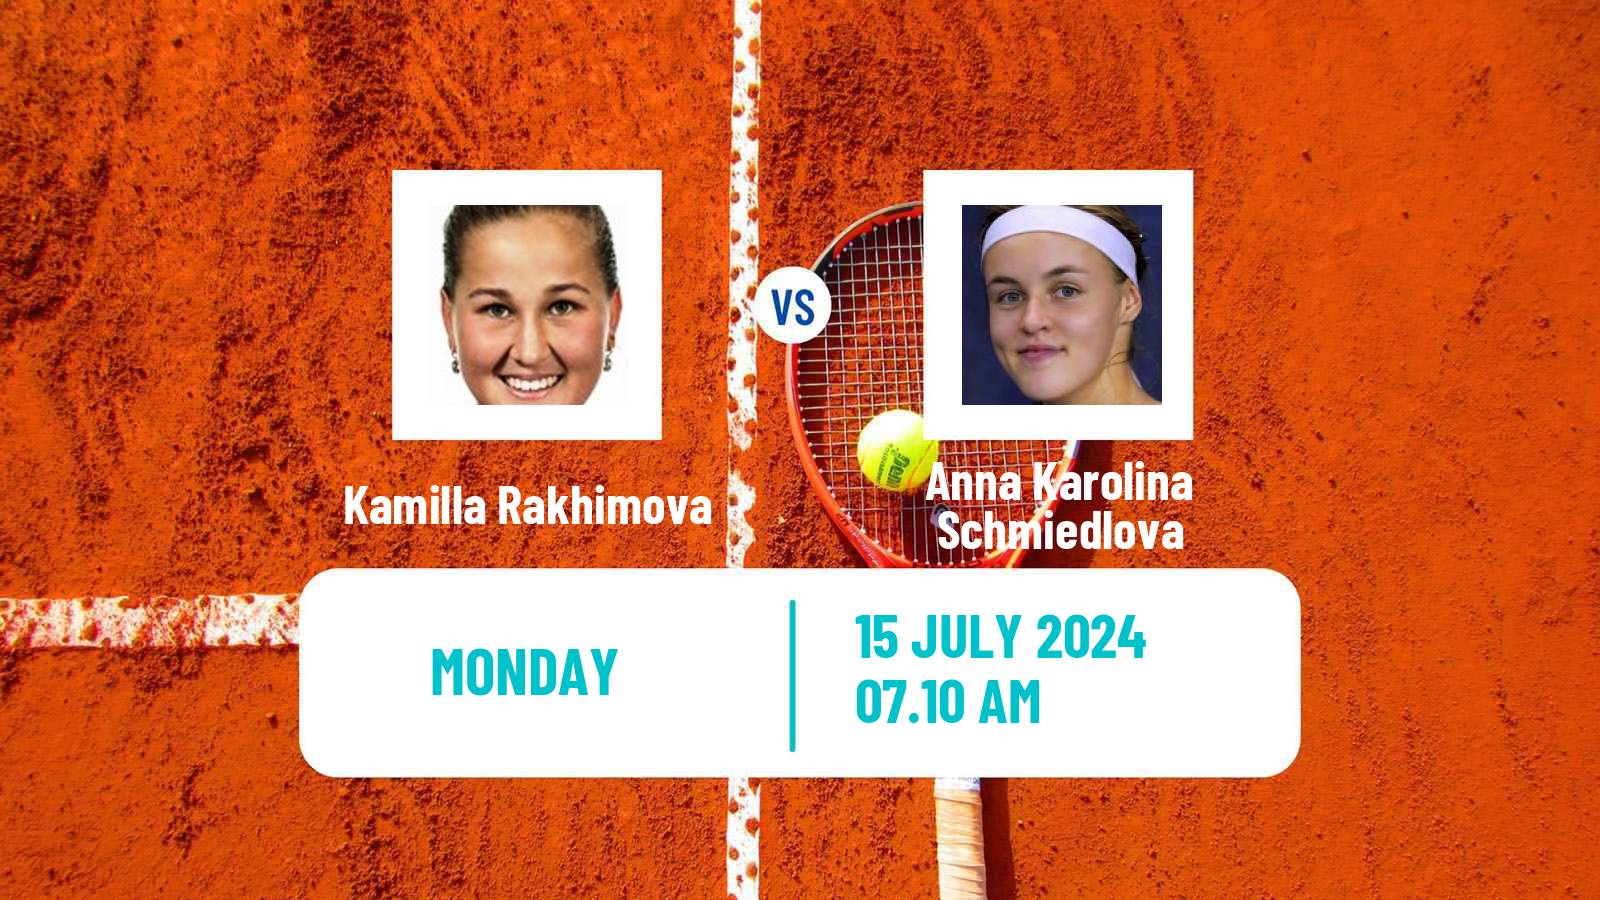 Tennis WTA Budapest Kamilla Rakhimova - Anna Karolina Schmiedlova